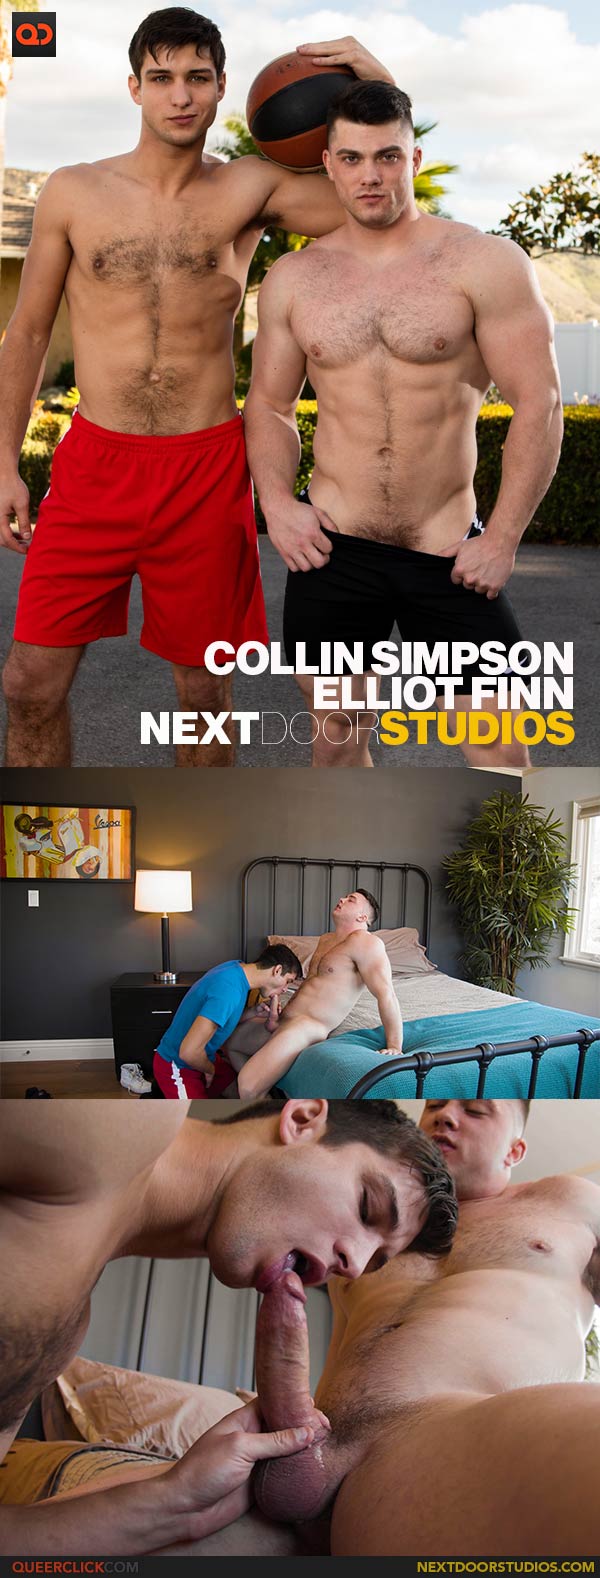 NextDoorStudios: Elliot Finn and Collin Simpson - SCENE LIVE FEBRUARY 20!